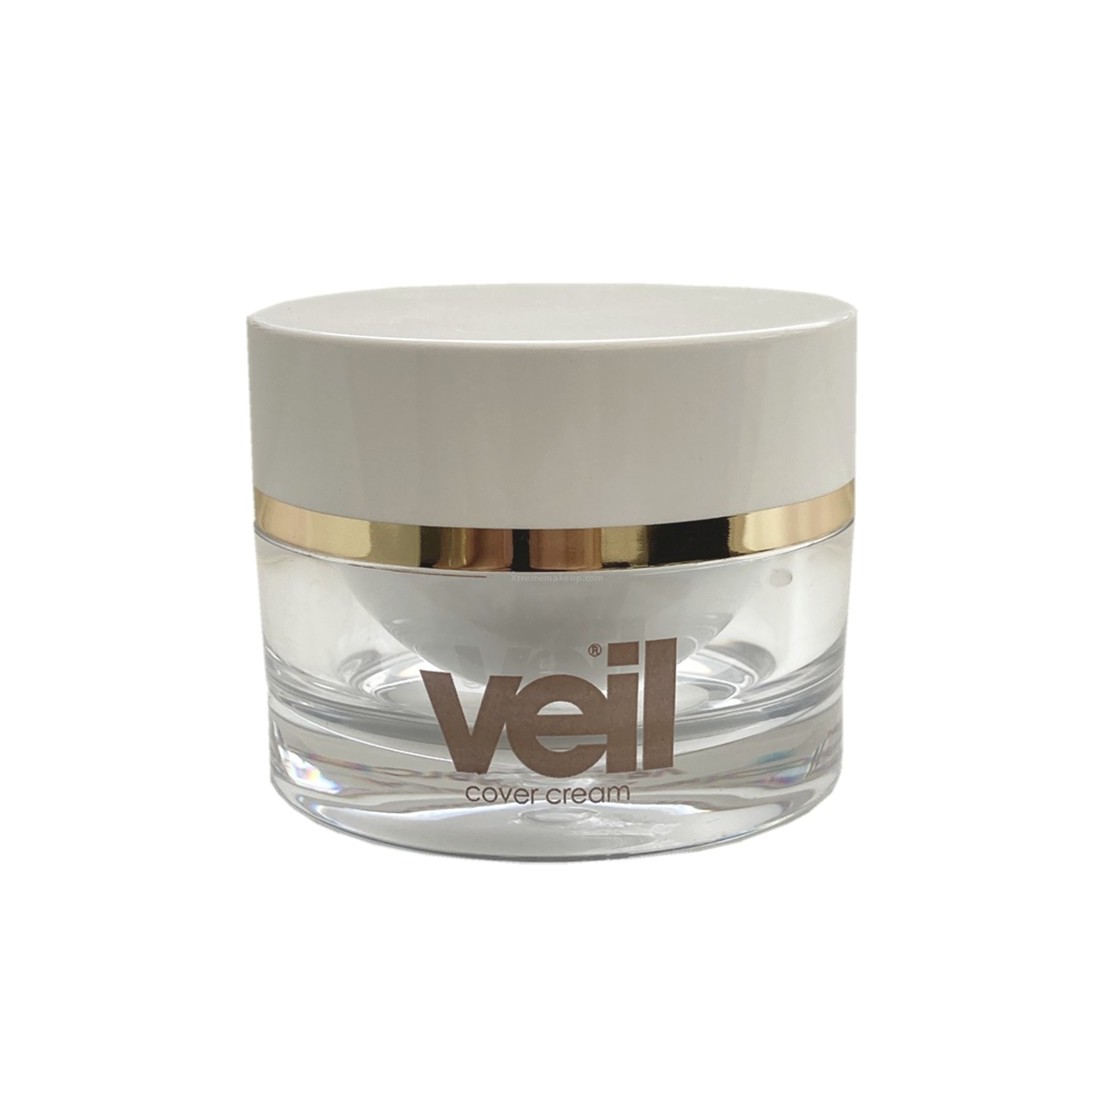 Veil Cover Cream (10g)